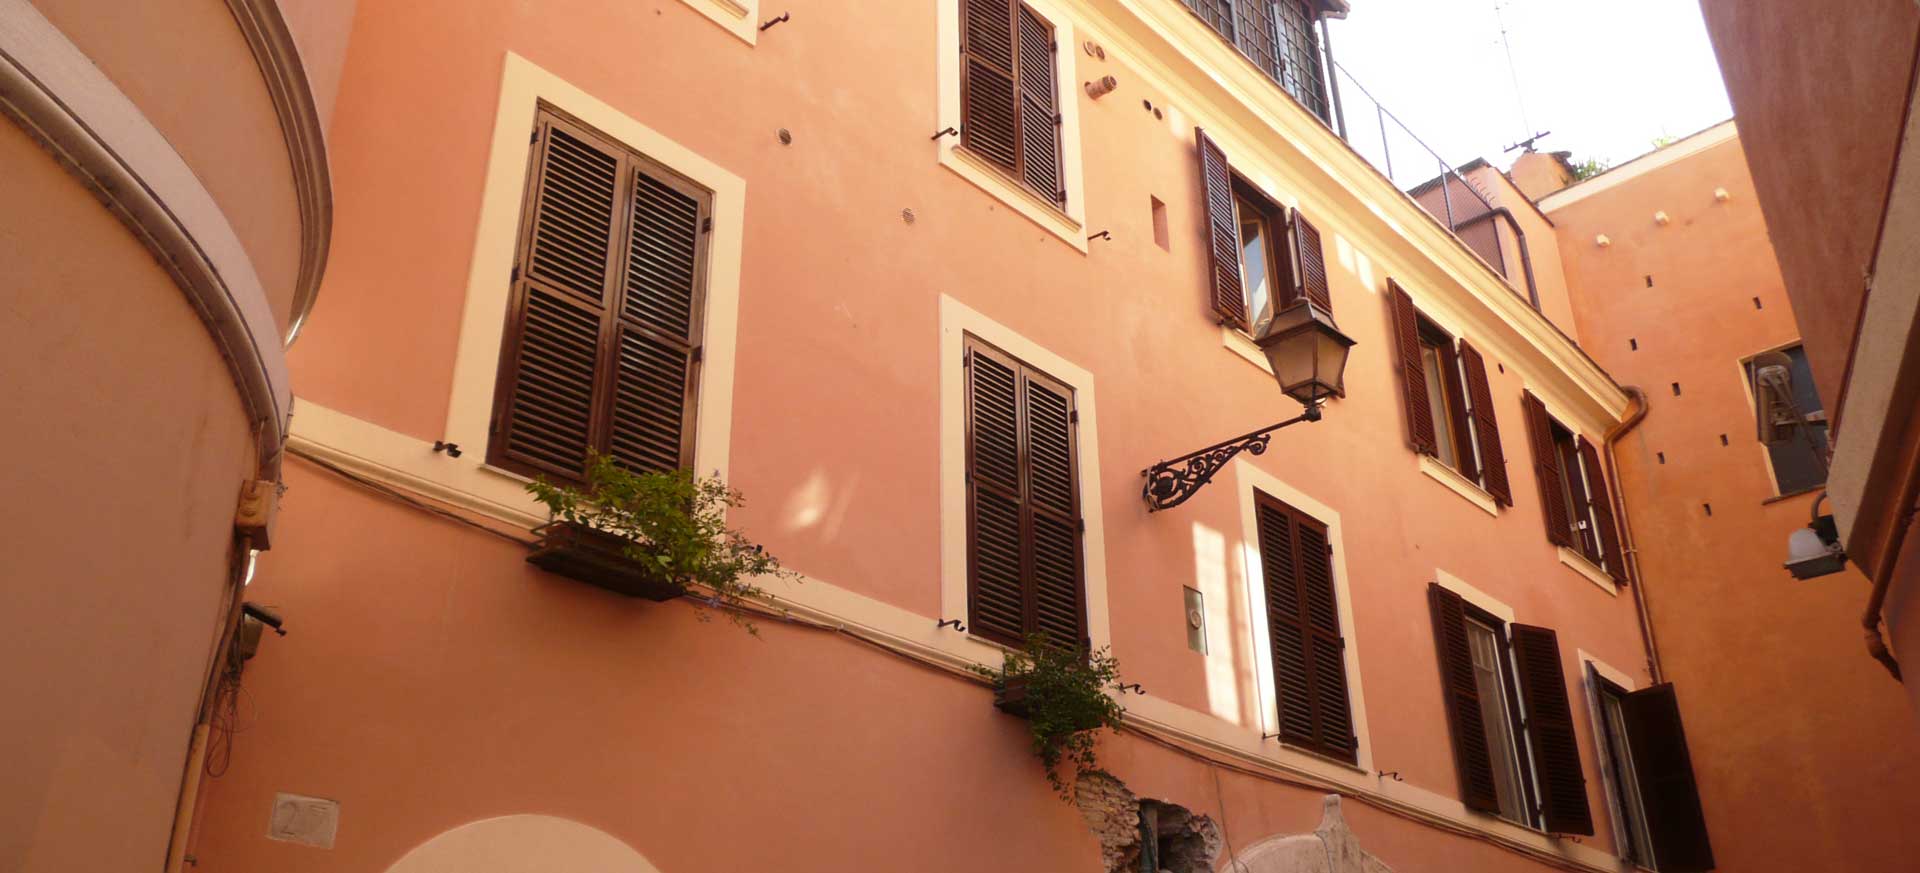 Maison d`hôte Rome - Trastevere - 